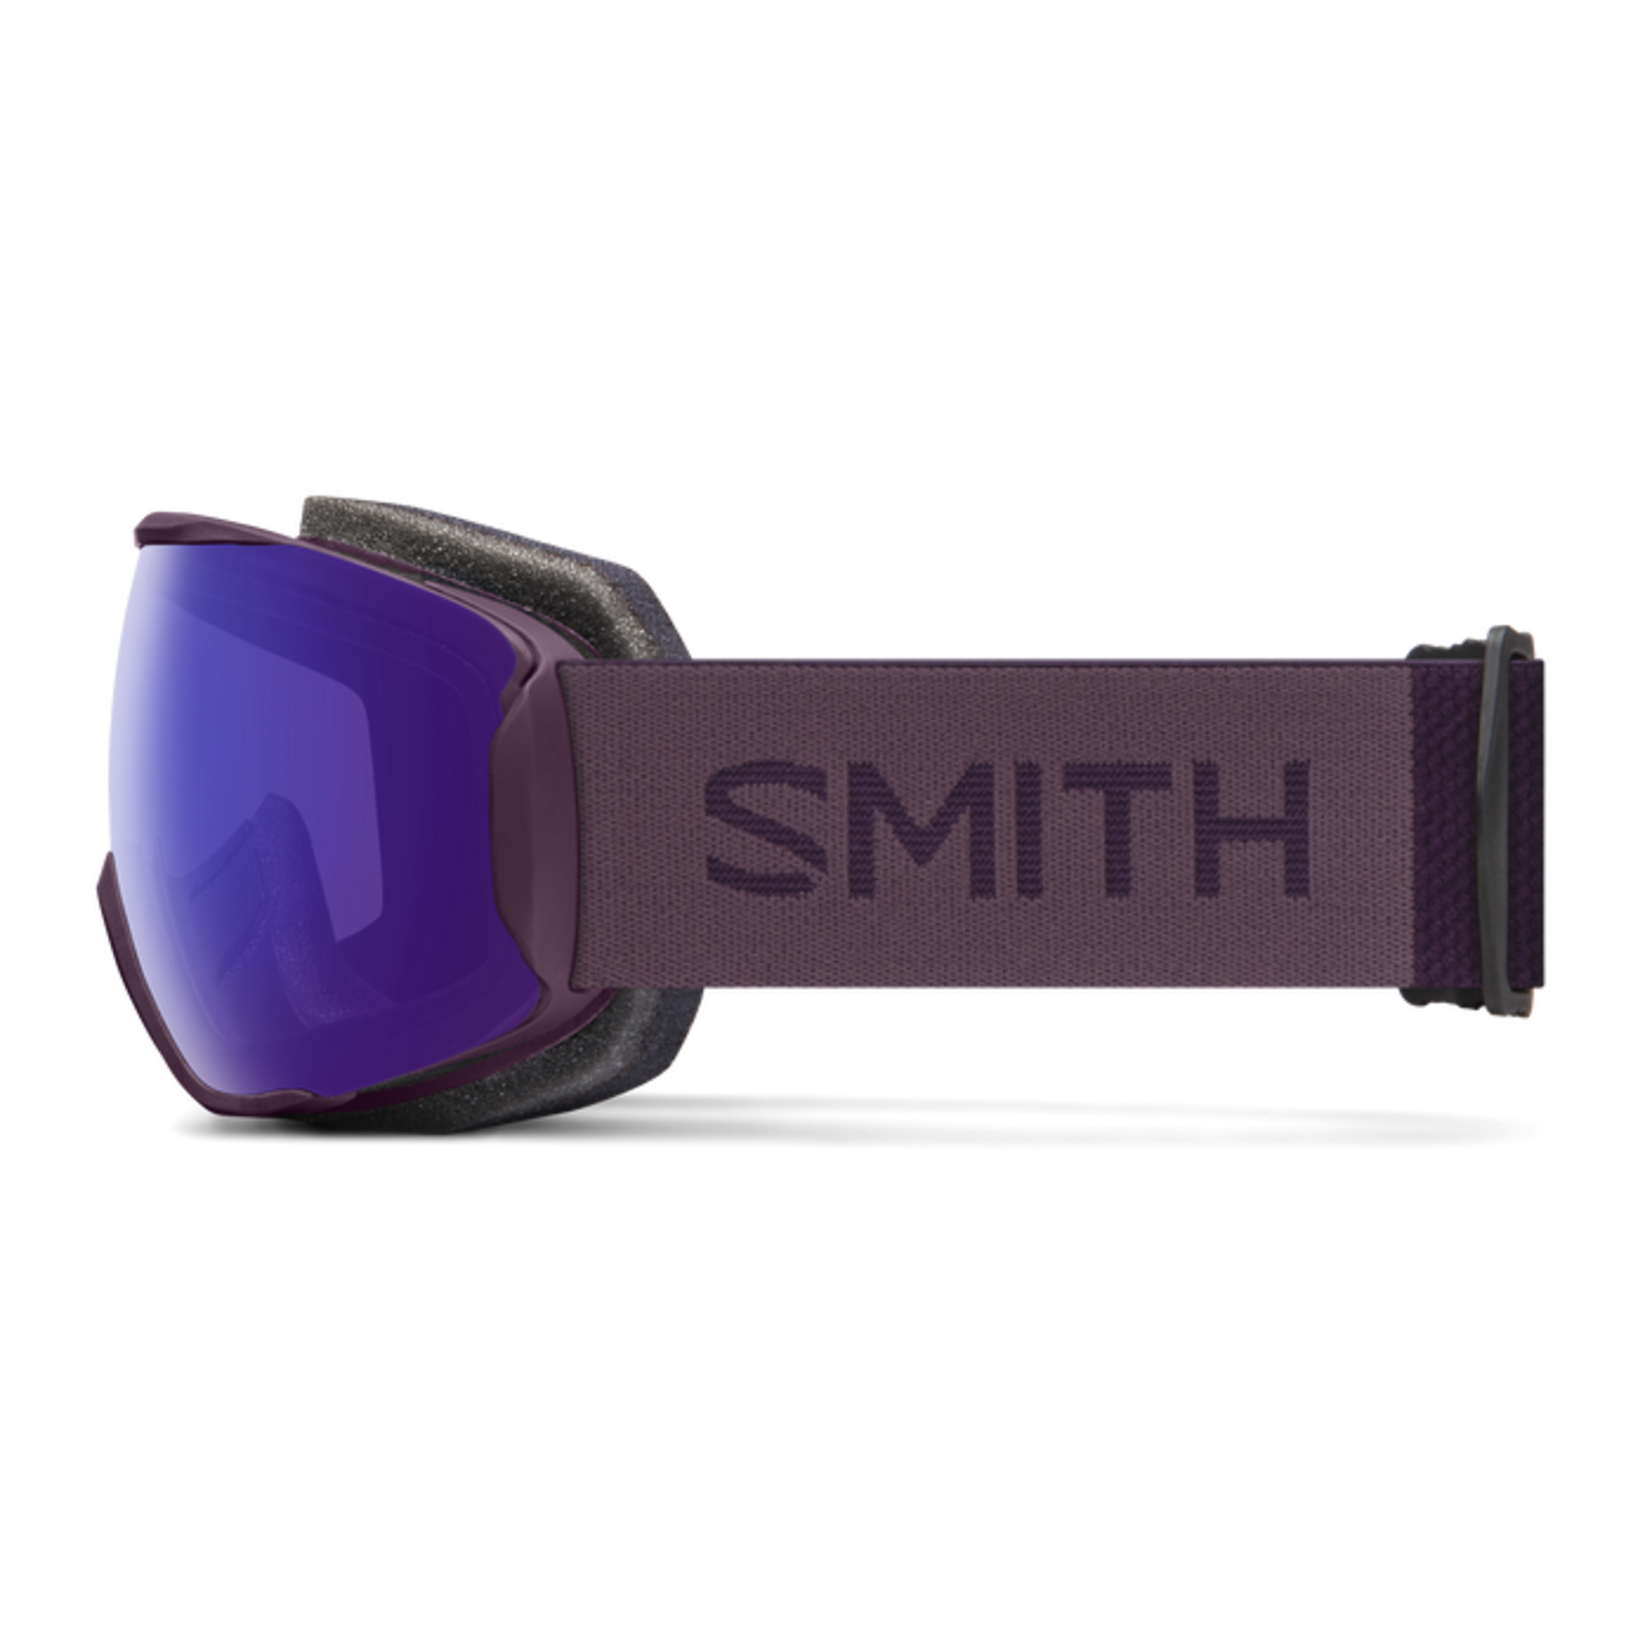 Smith Smith Moment Goggles